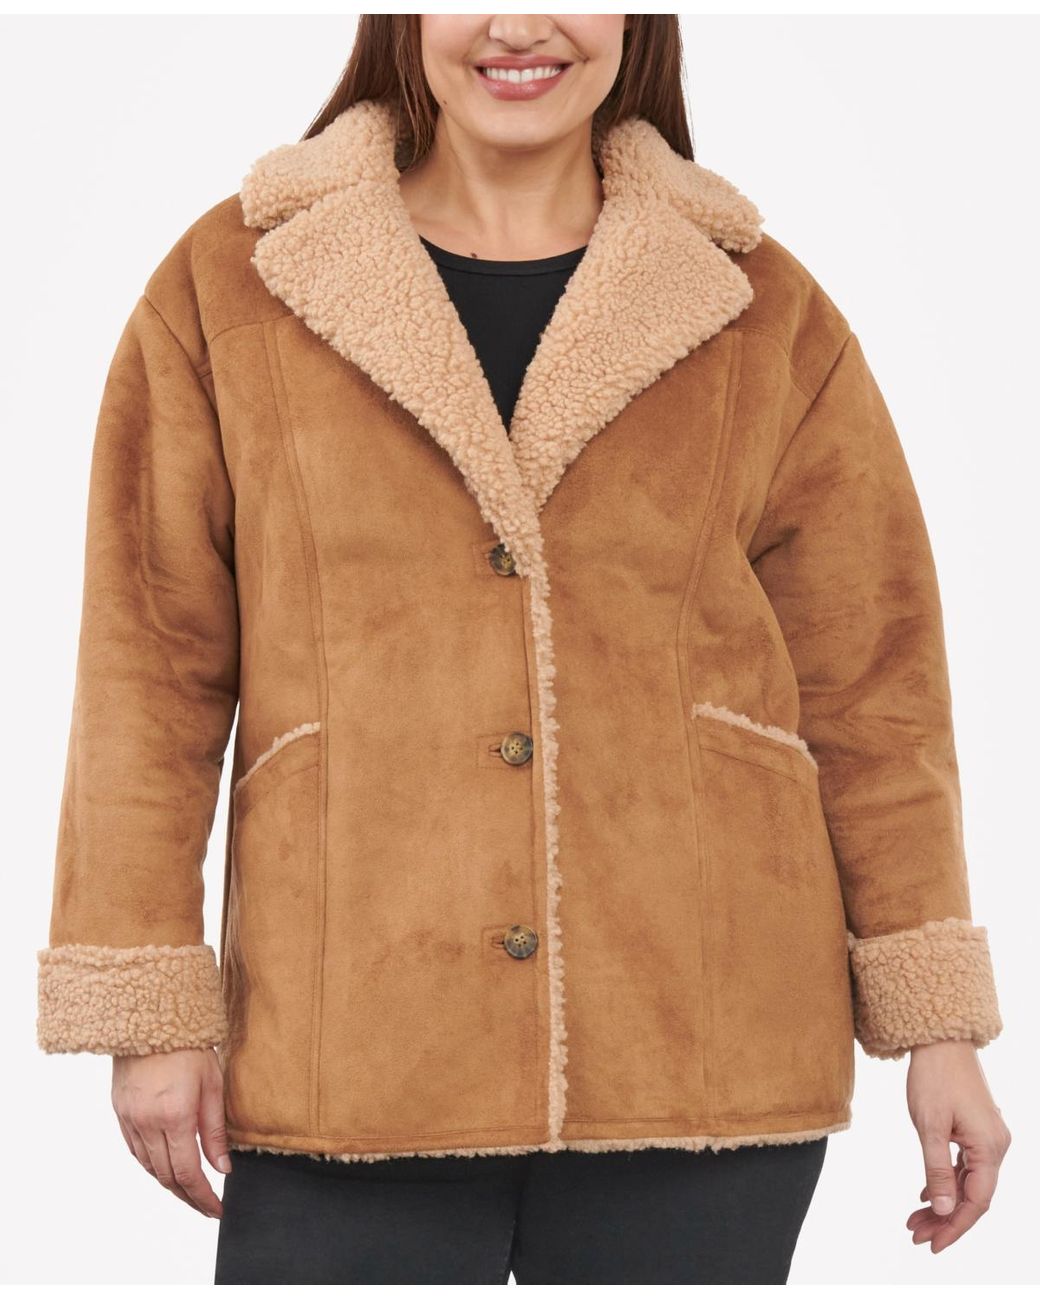 Lucky Brand, Jackets & Coats, Lucky Brand Faux Fur Jacket Zip Up